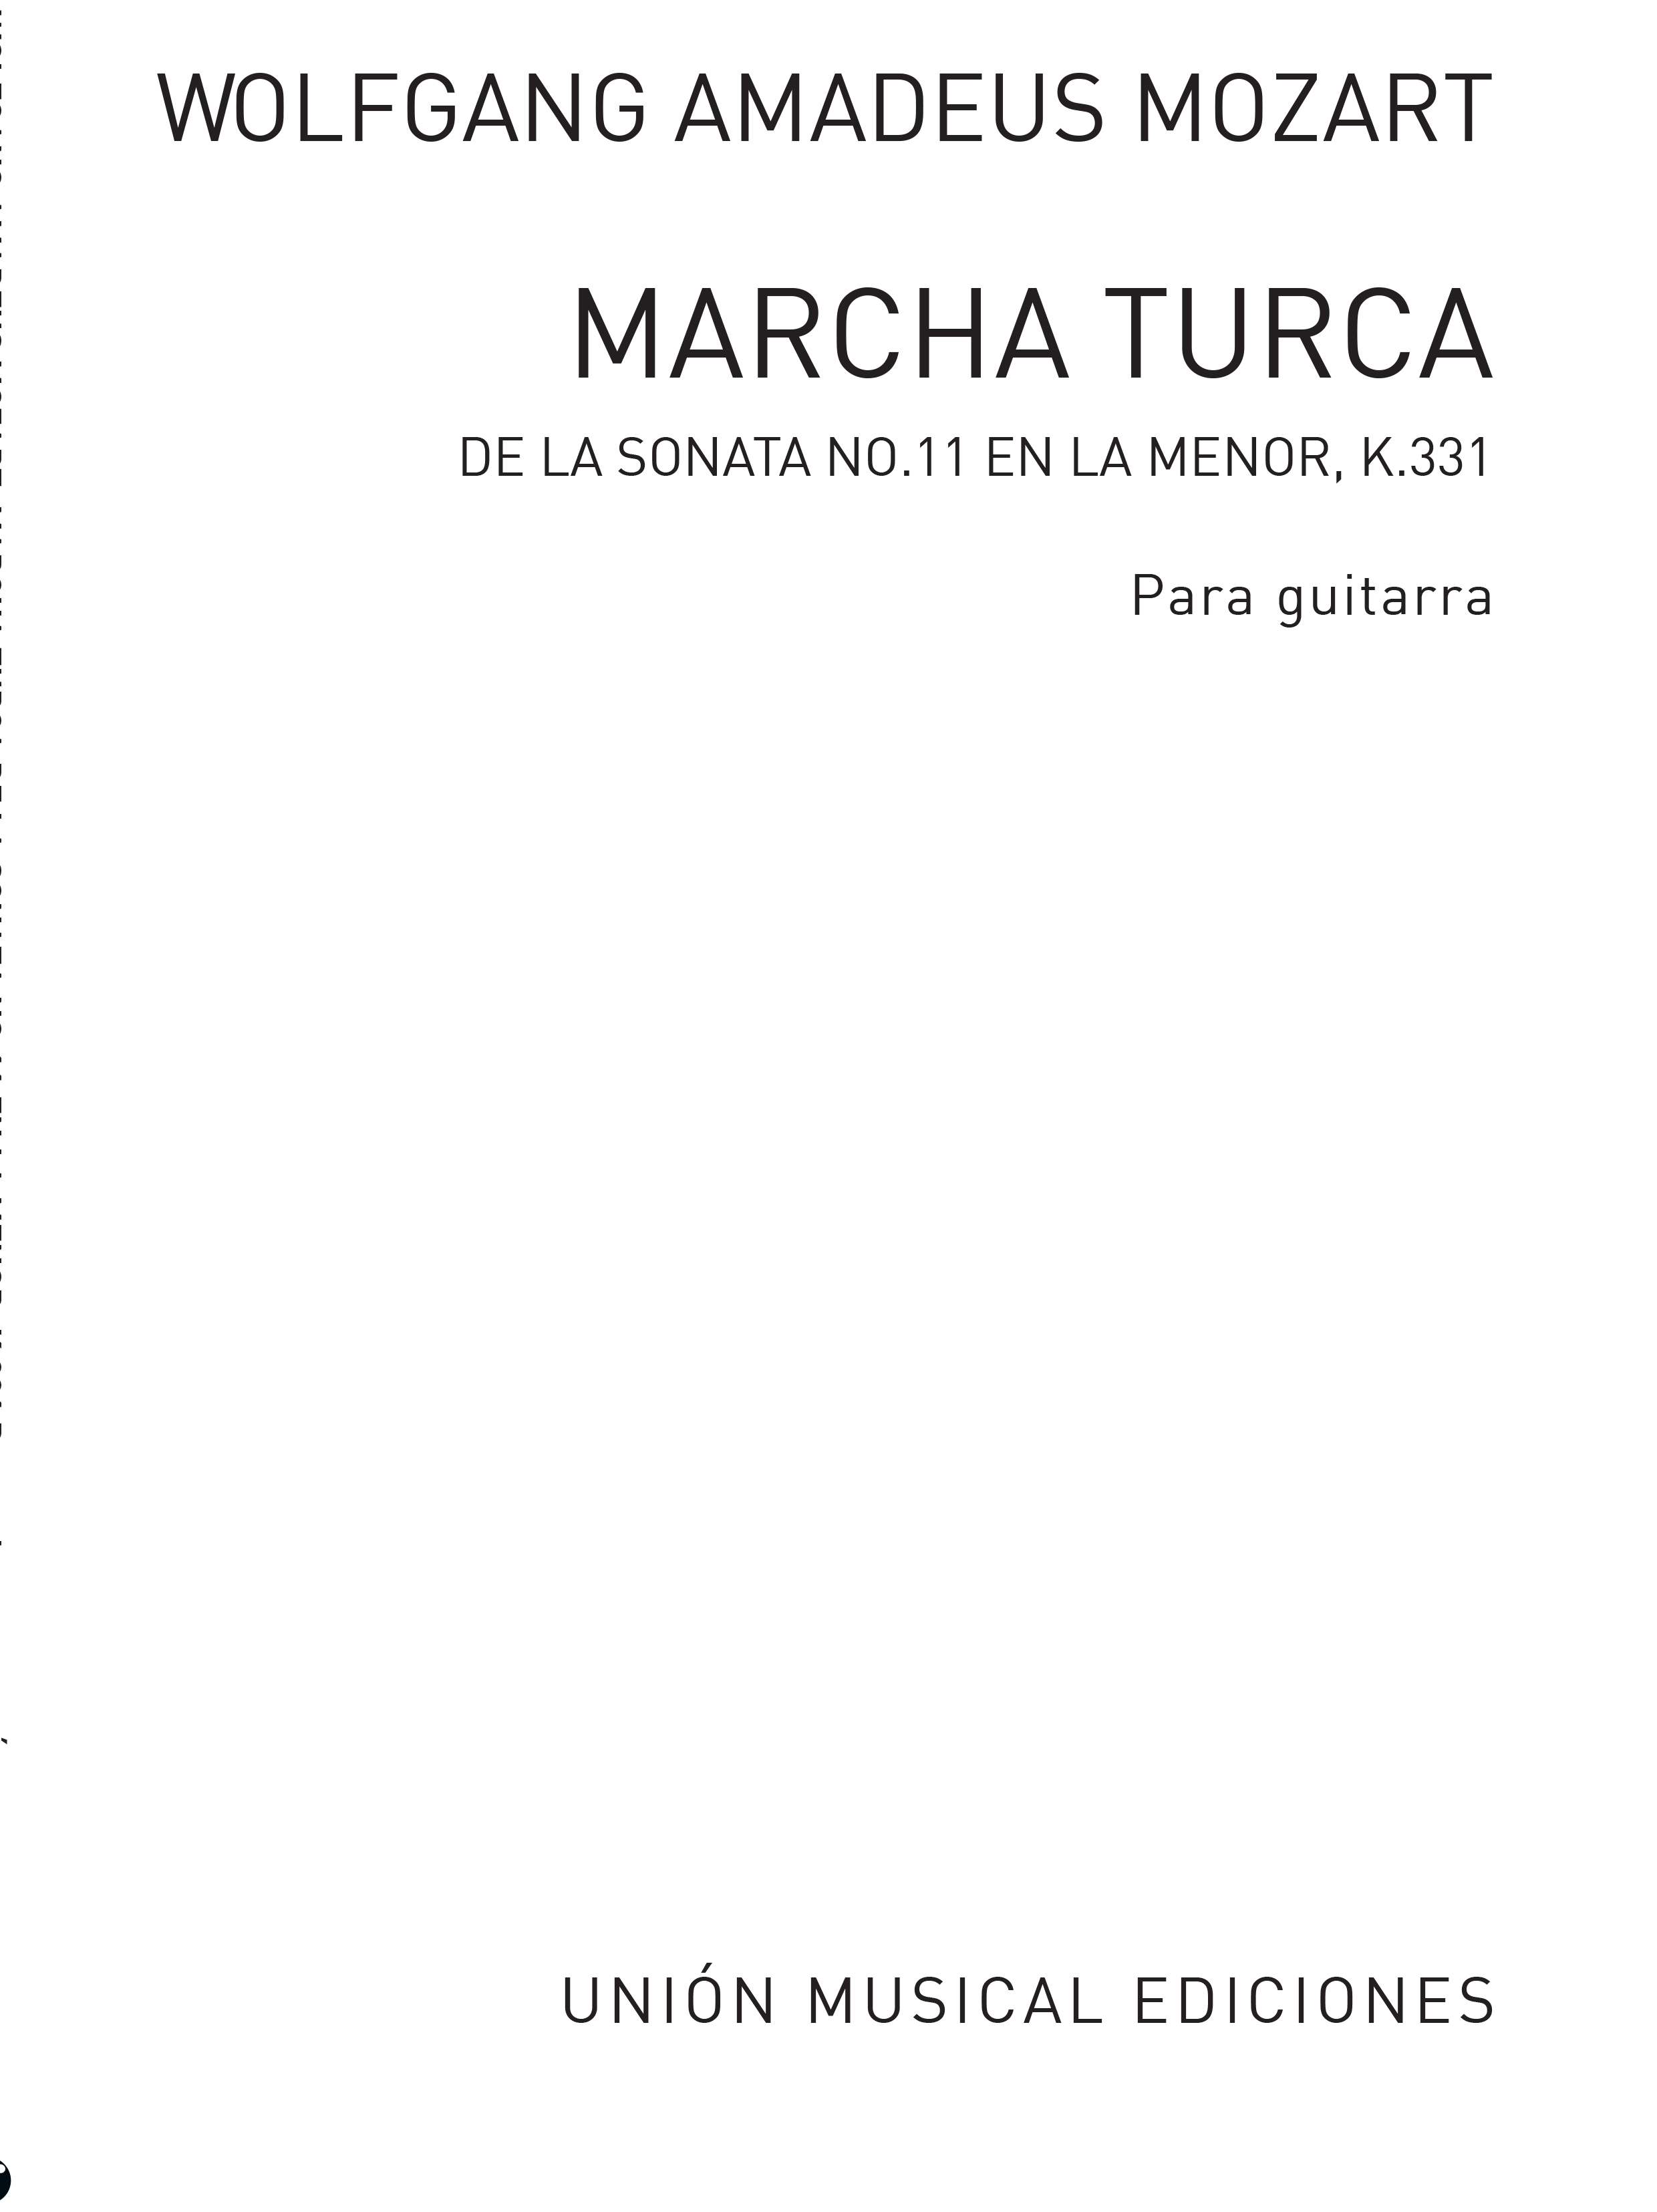 Wolfgang Amadeus Mozart: Marcha Turca (Sonata No.11 In A K.331) (Guitar):